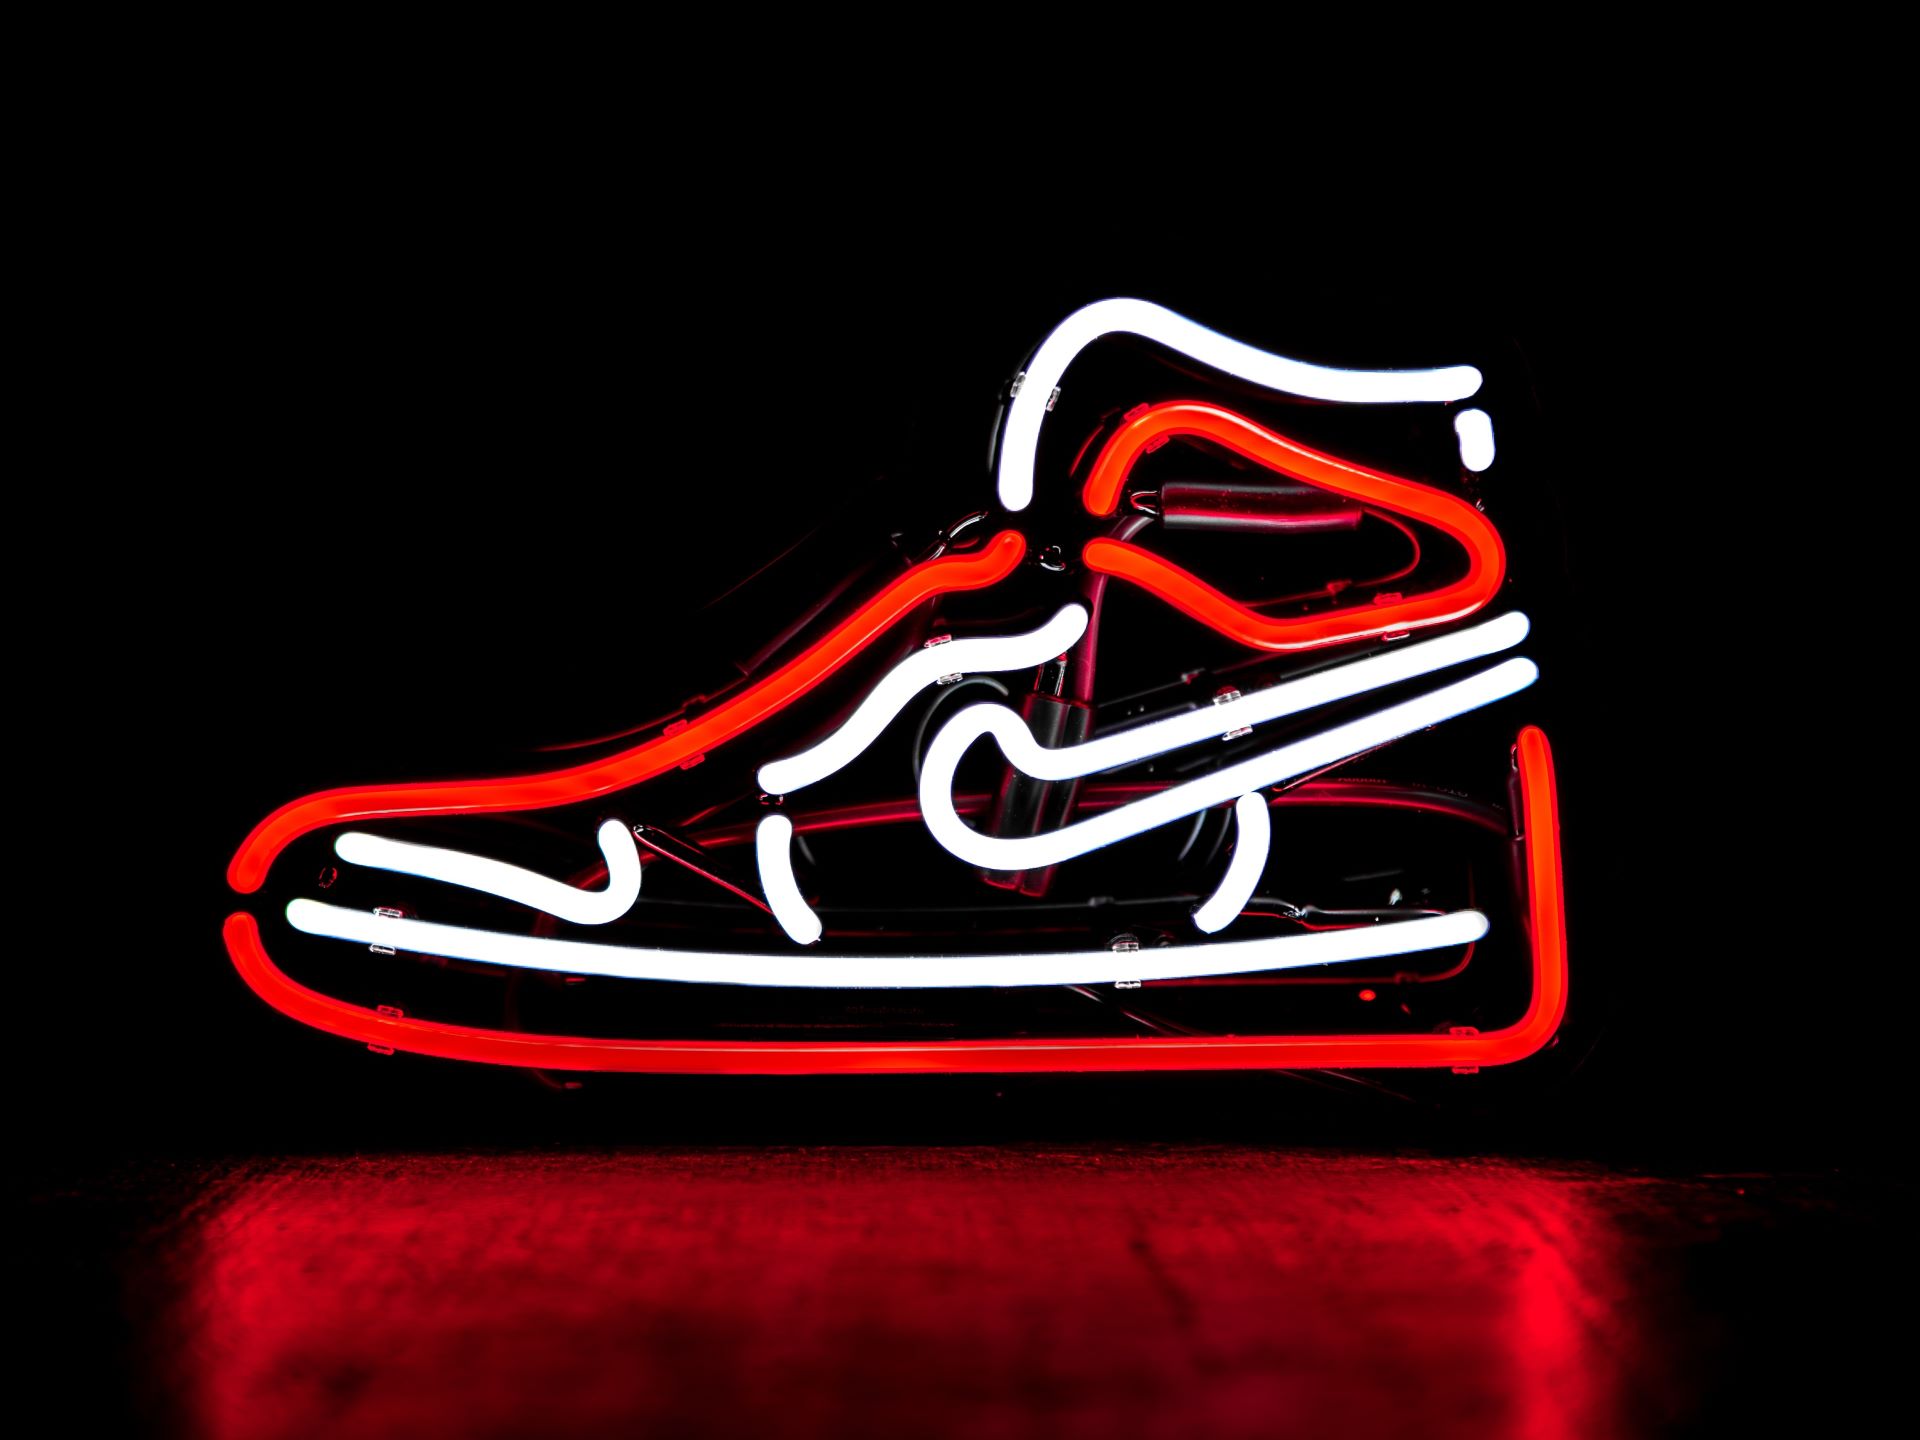 A neon sign for Air Jordans,